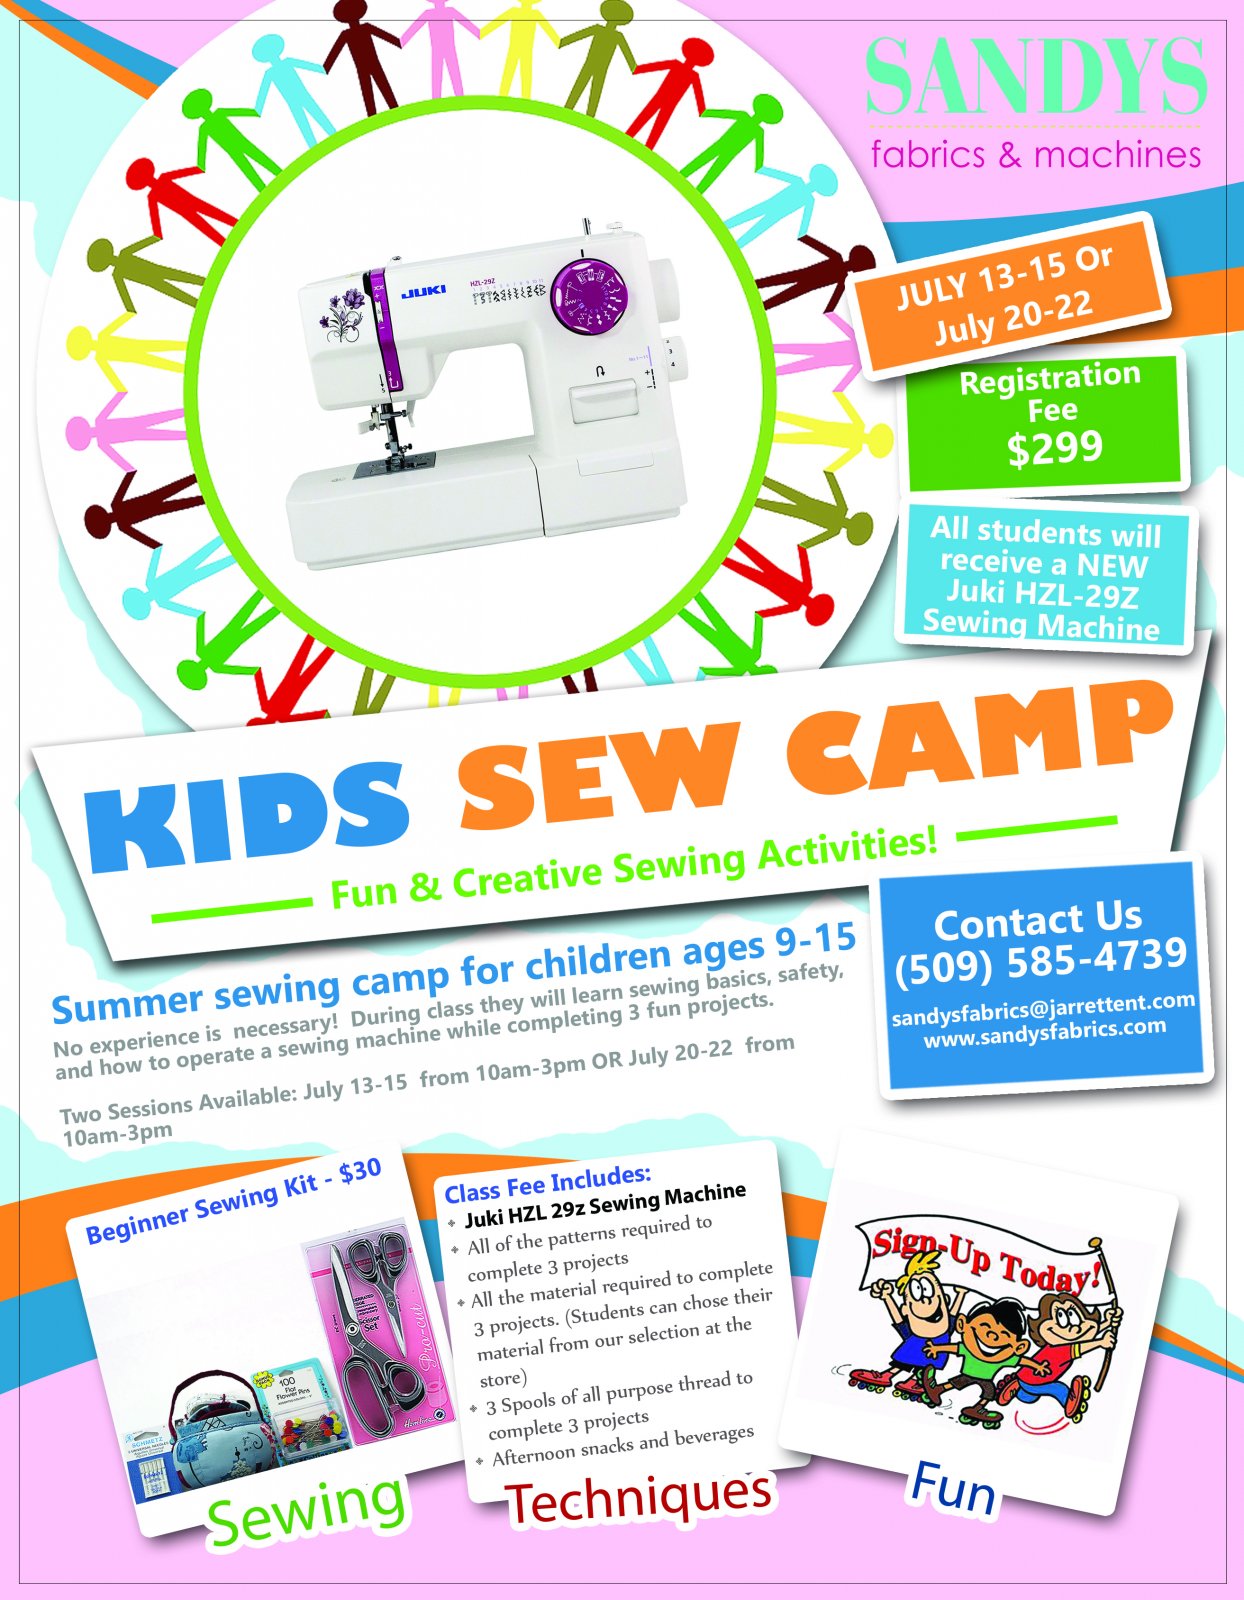 Kids Sew Camp At Sandy's Fabrics & Machines In Kennewick, Washington